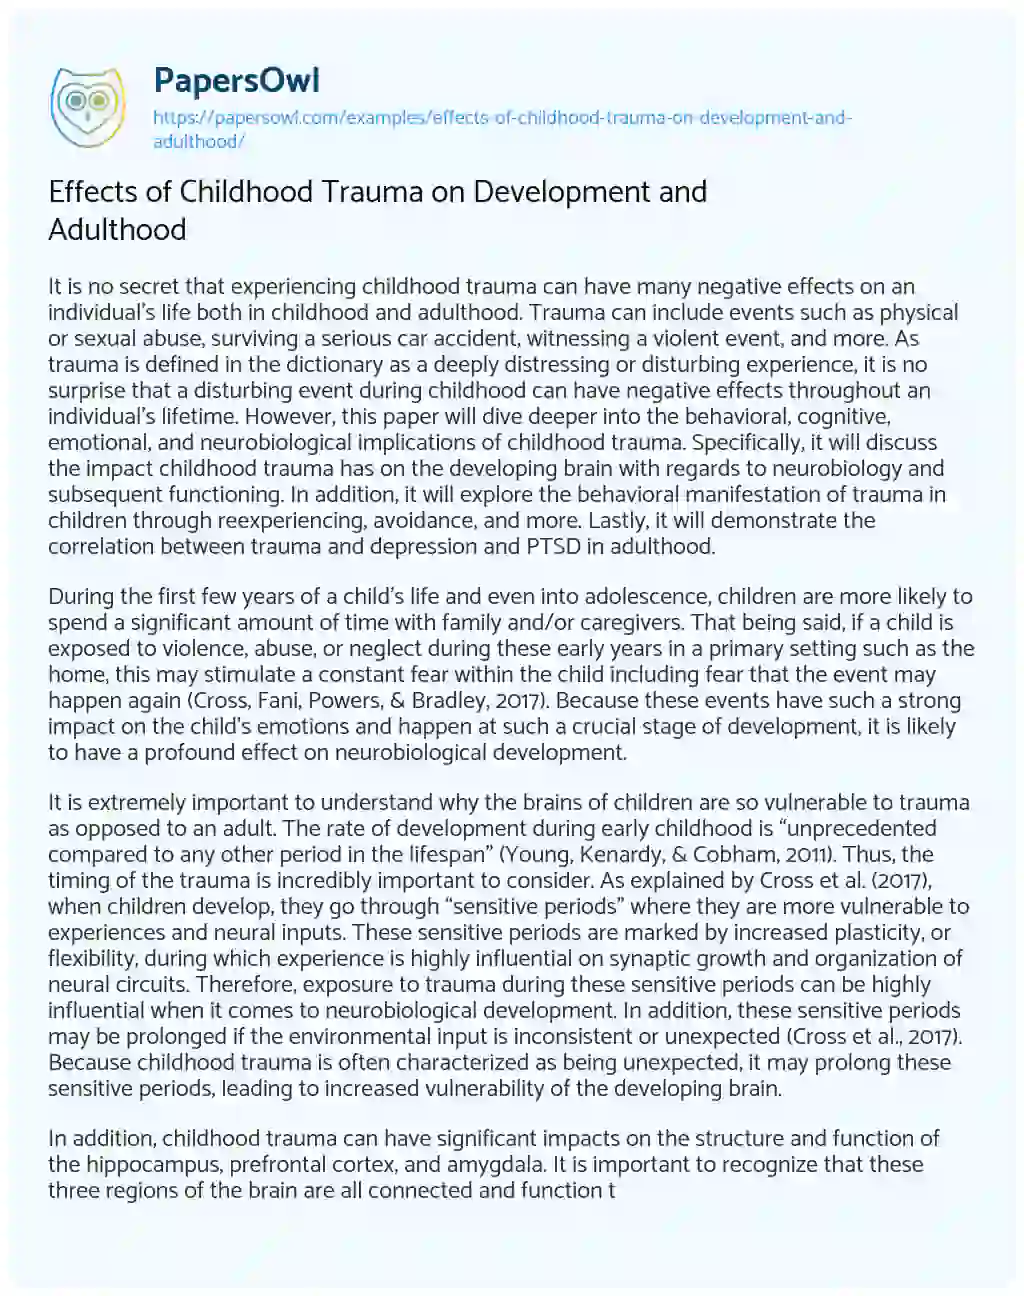 Effects of Childhood Trauma on Development and Adulthood essay